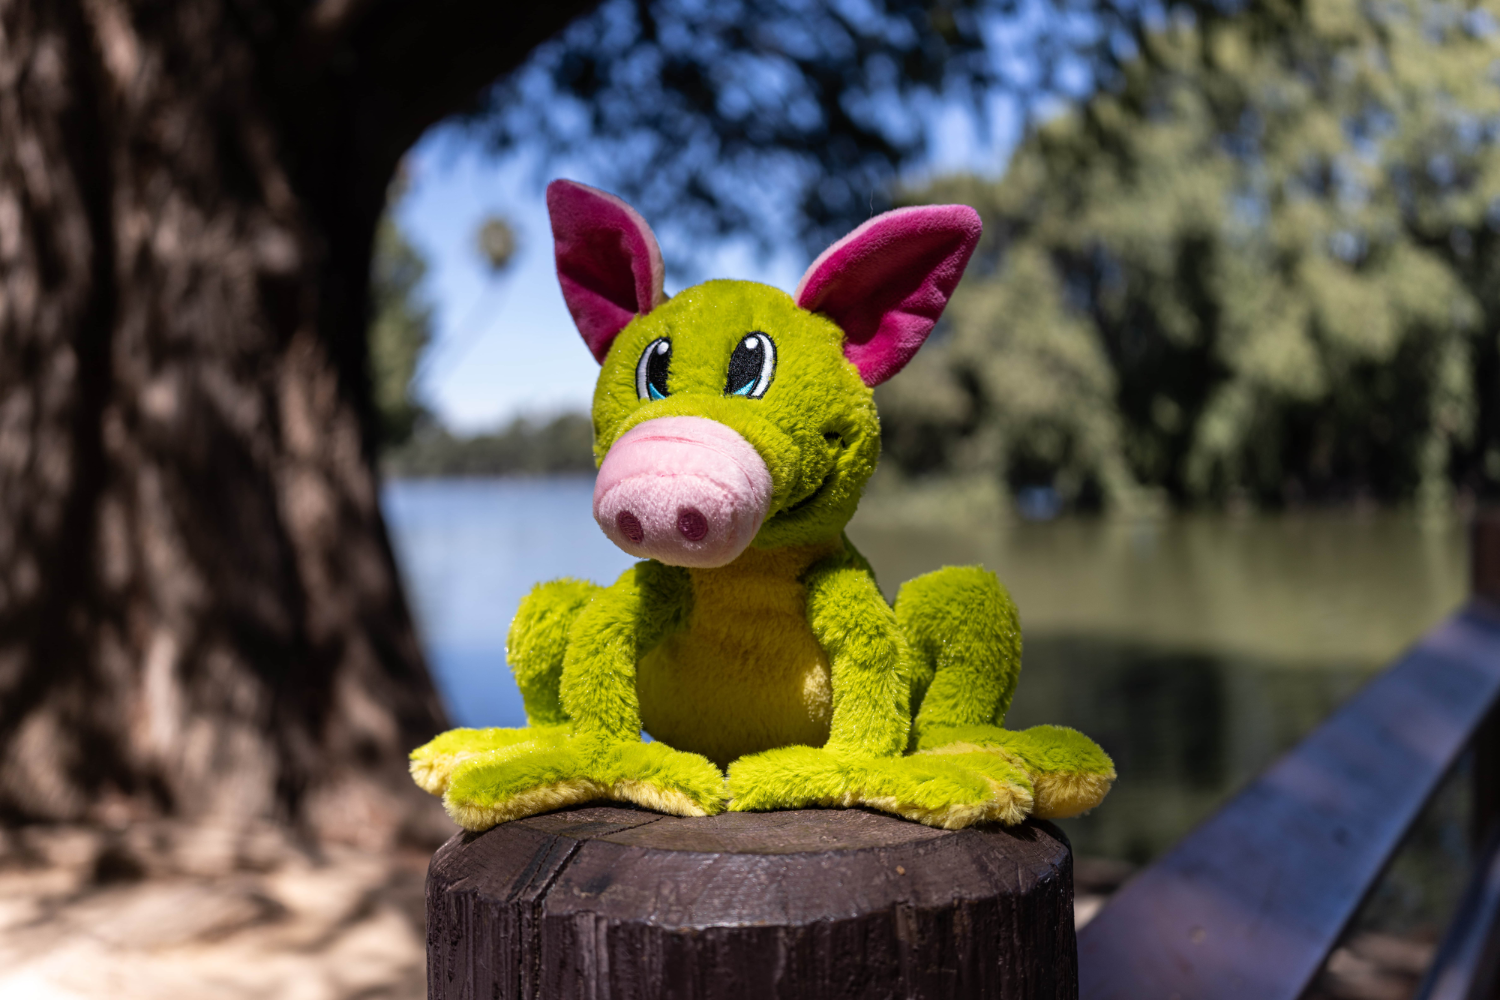 Nuttipetz Frohog Plush Toy